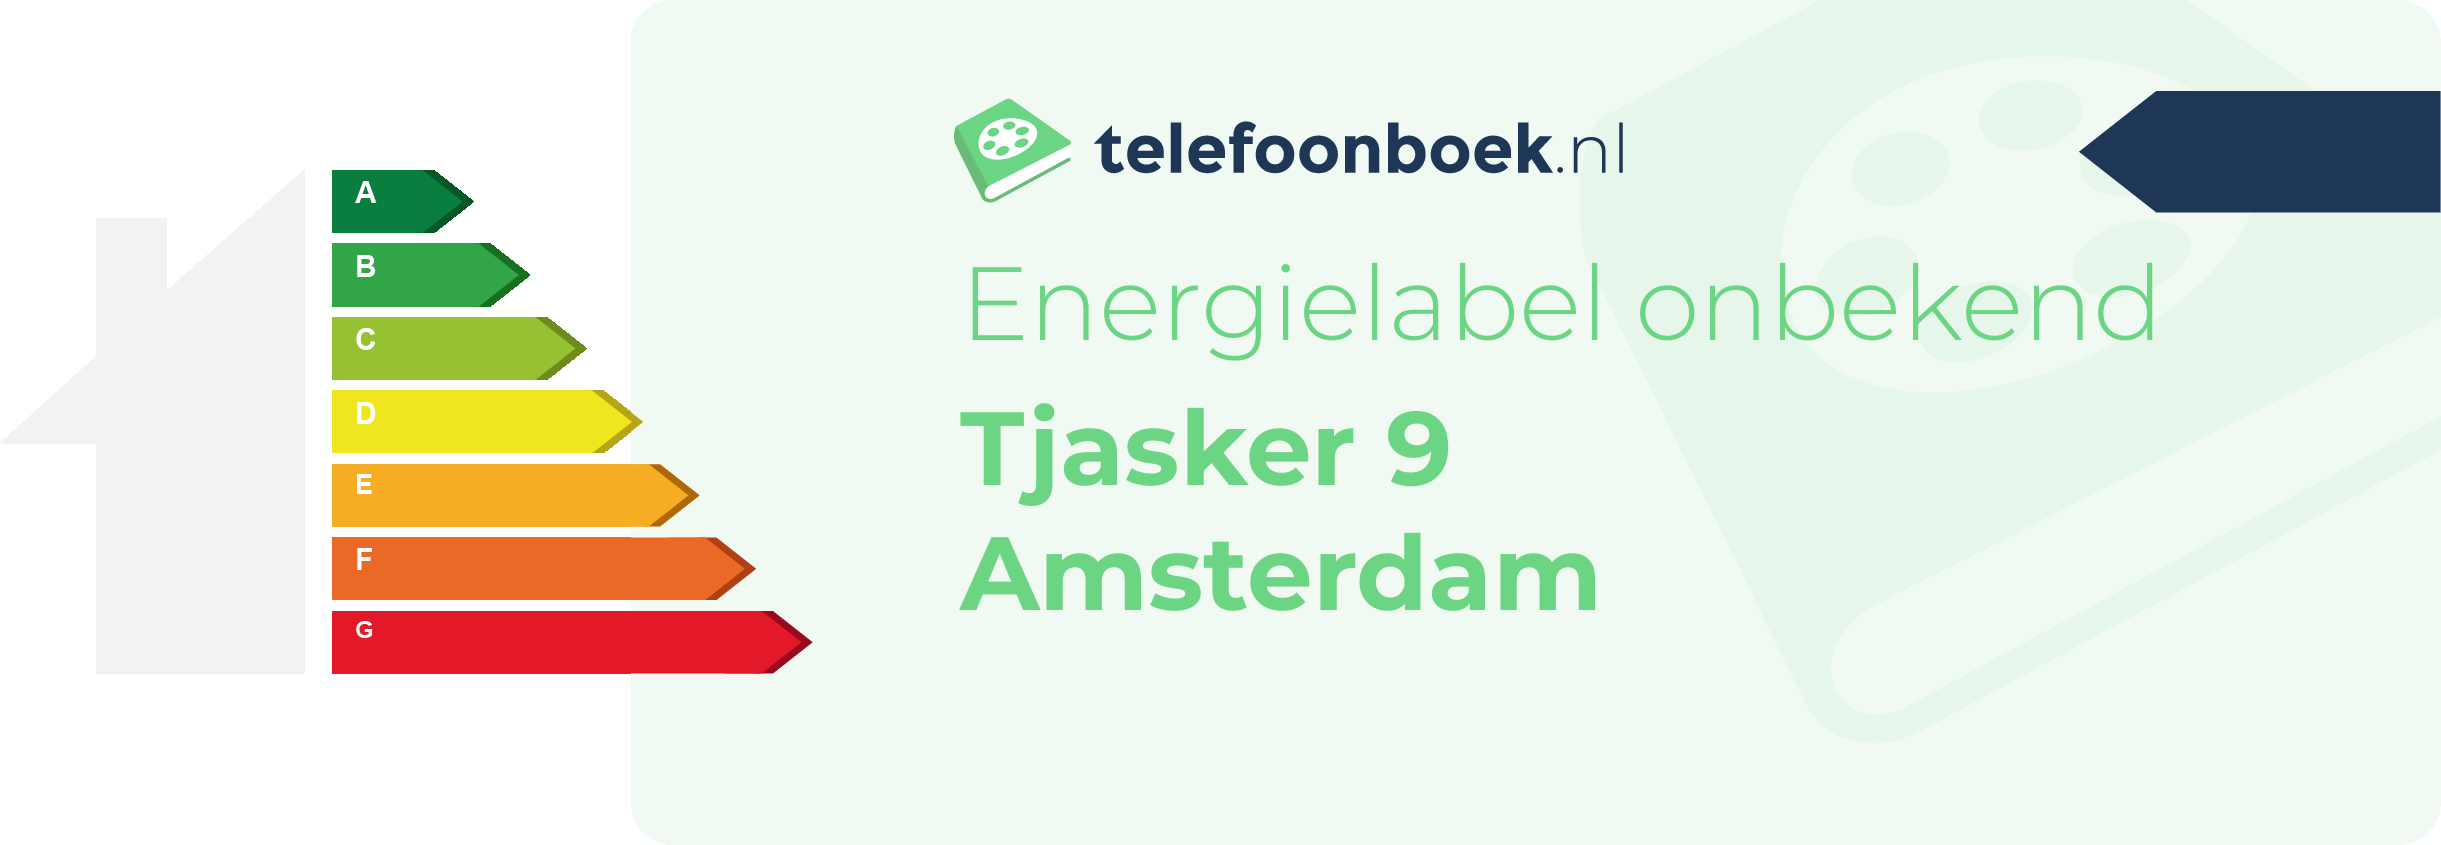 Energielabel Tjasker 9 Amsterdam